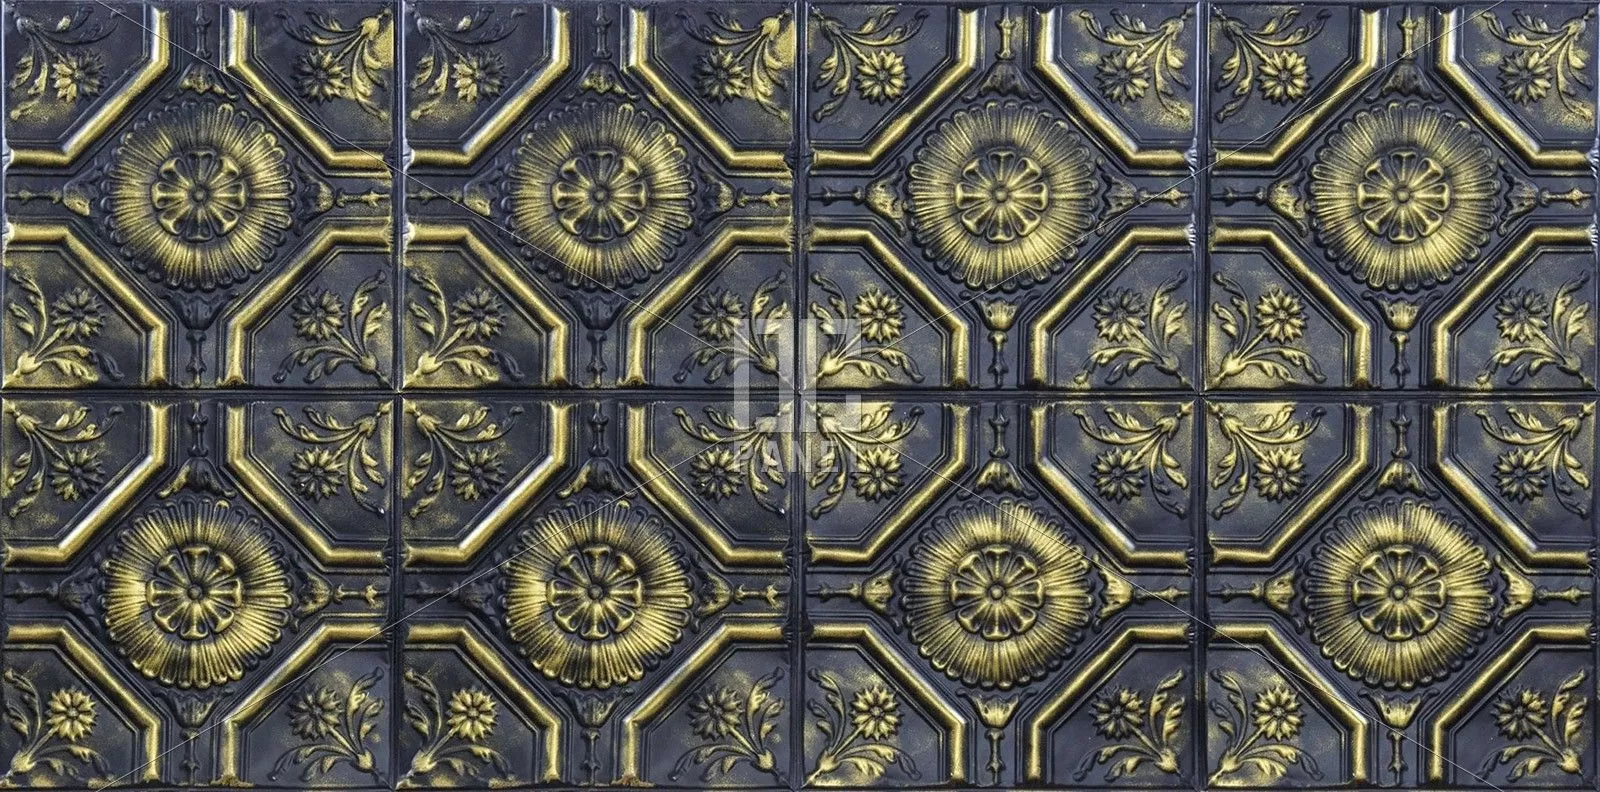 b403 soffitto oro nero barocco karo desenli fiber duvar paneli 1